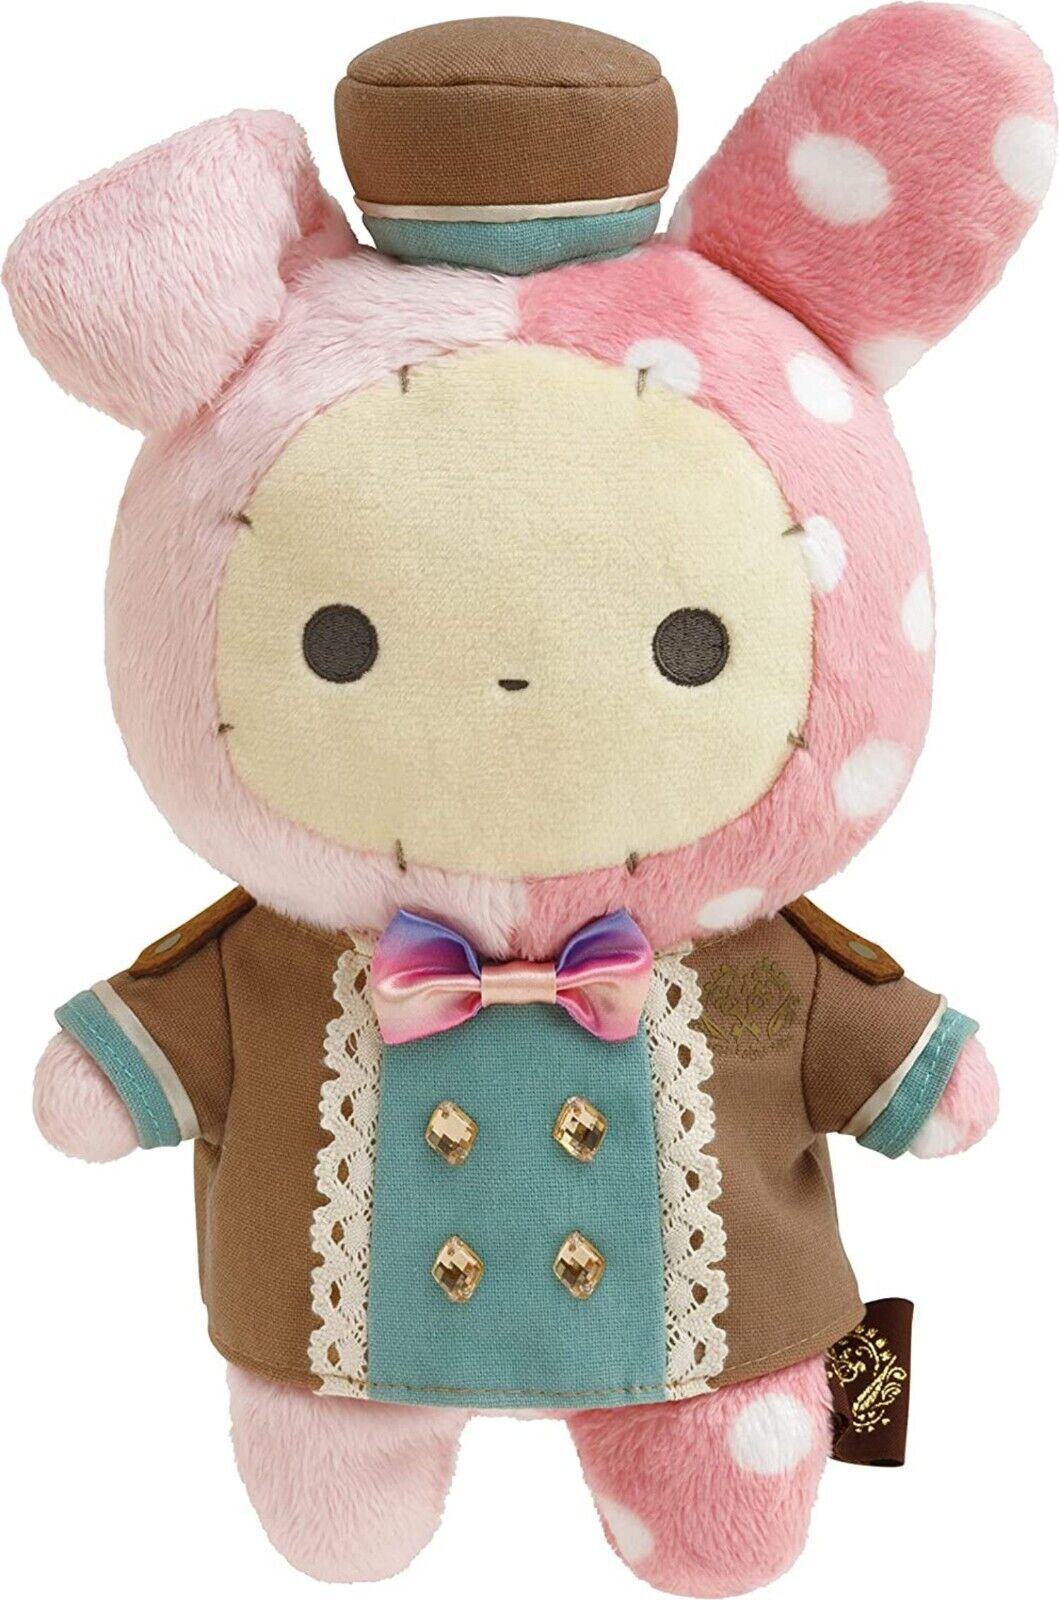 San-X Sentimental Circus Collection Plush Doll Shappo Stuffed Toy MF48201 Japan